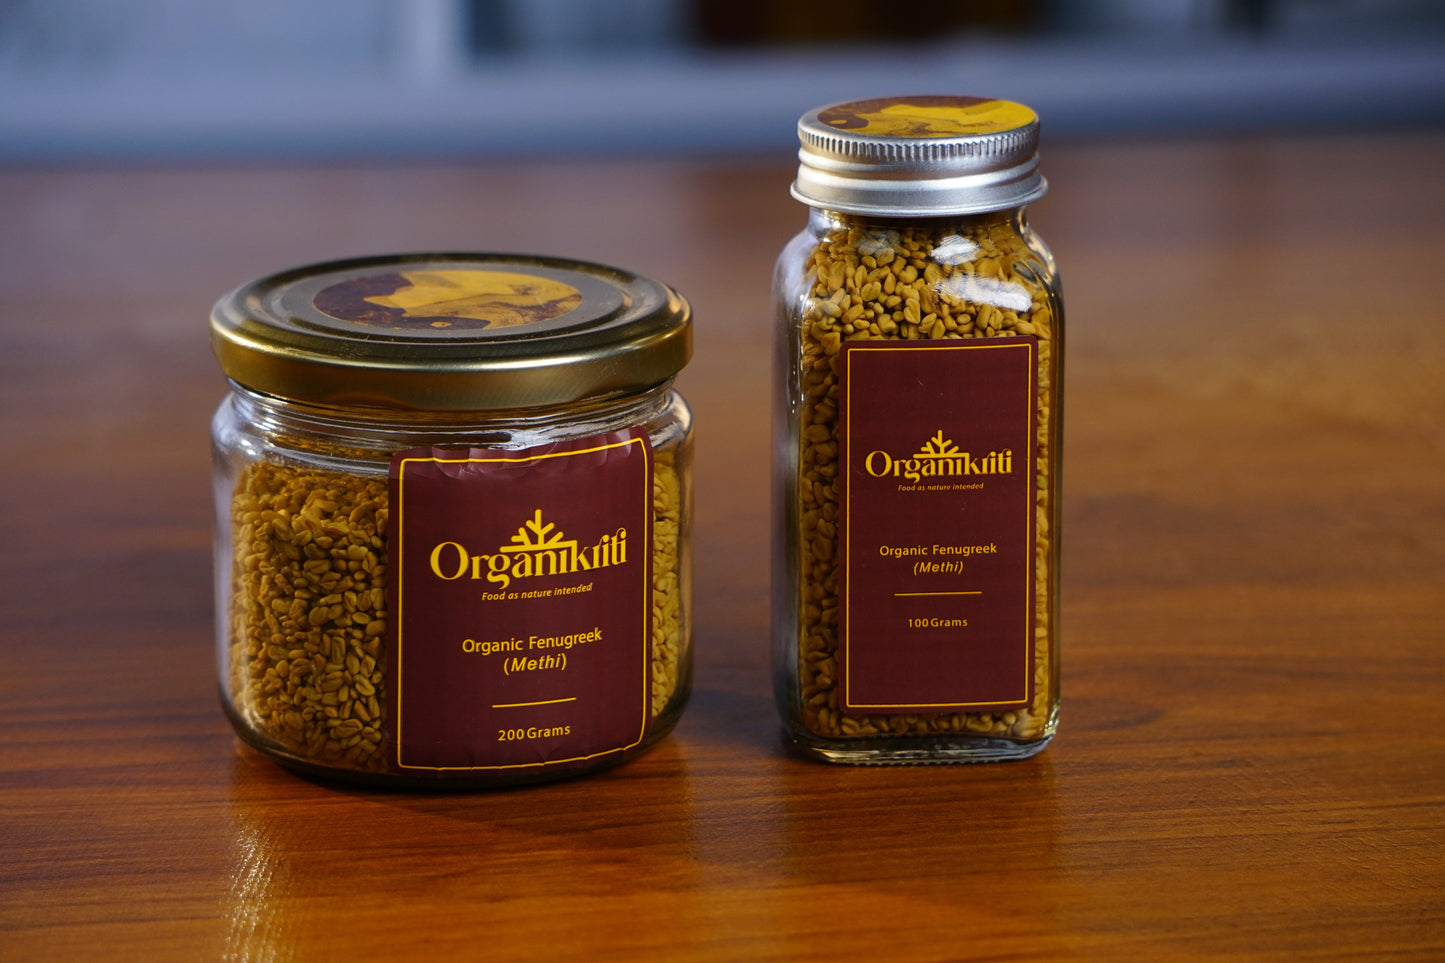 Organikriti Gift pack - Organic Cardamom, Cloves, Pepper, Red chilli powder and Fenugreek